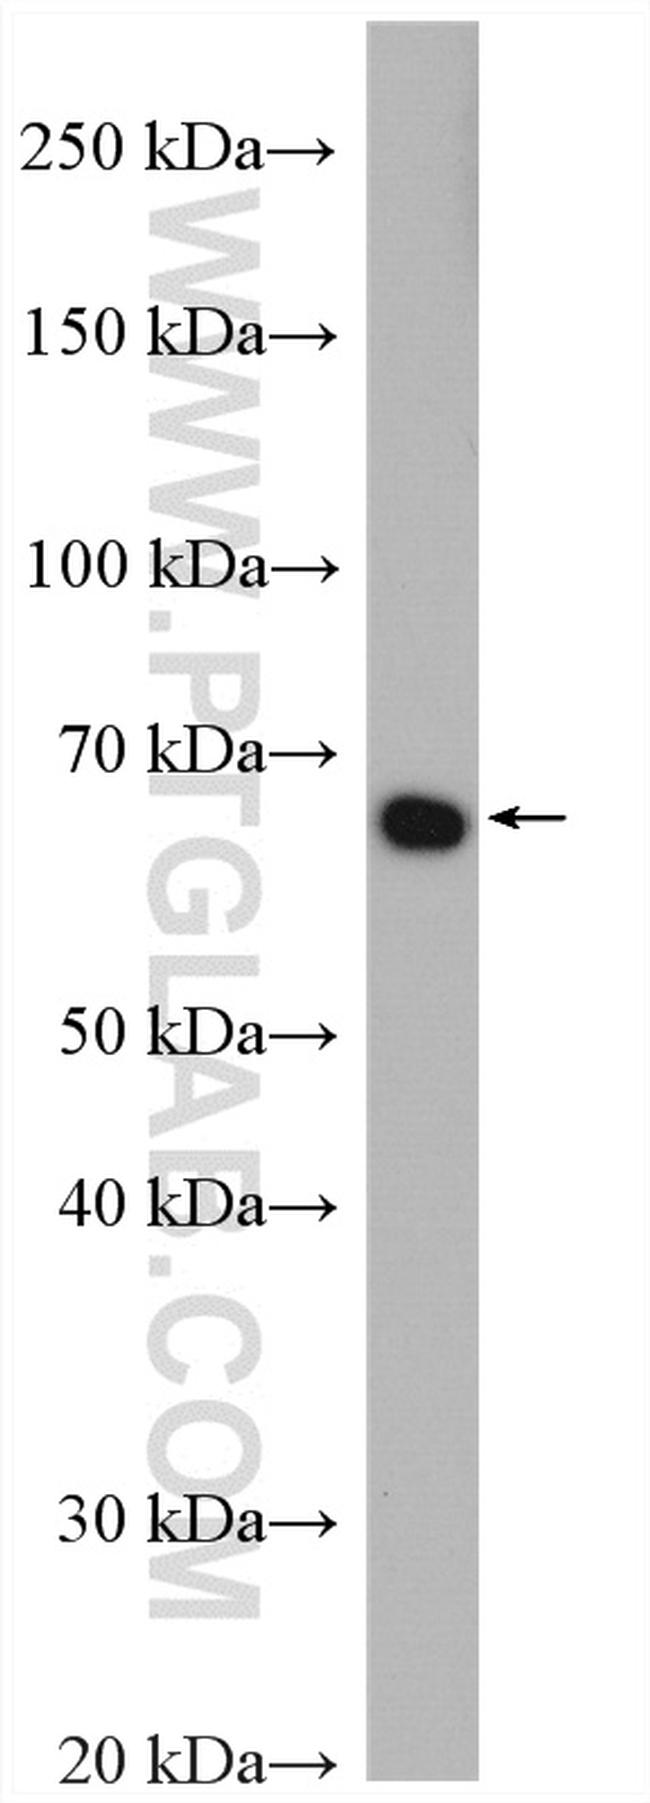 PLK1 Antibody in Western Blot (WB)